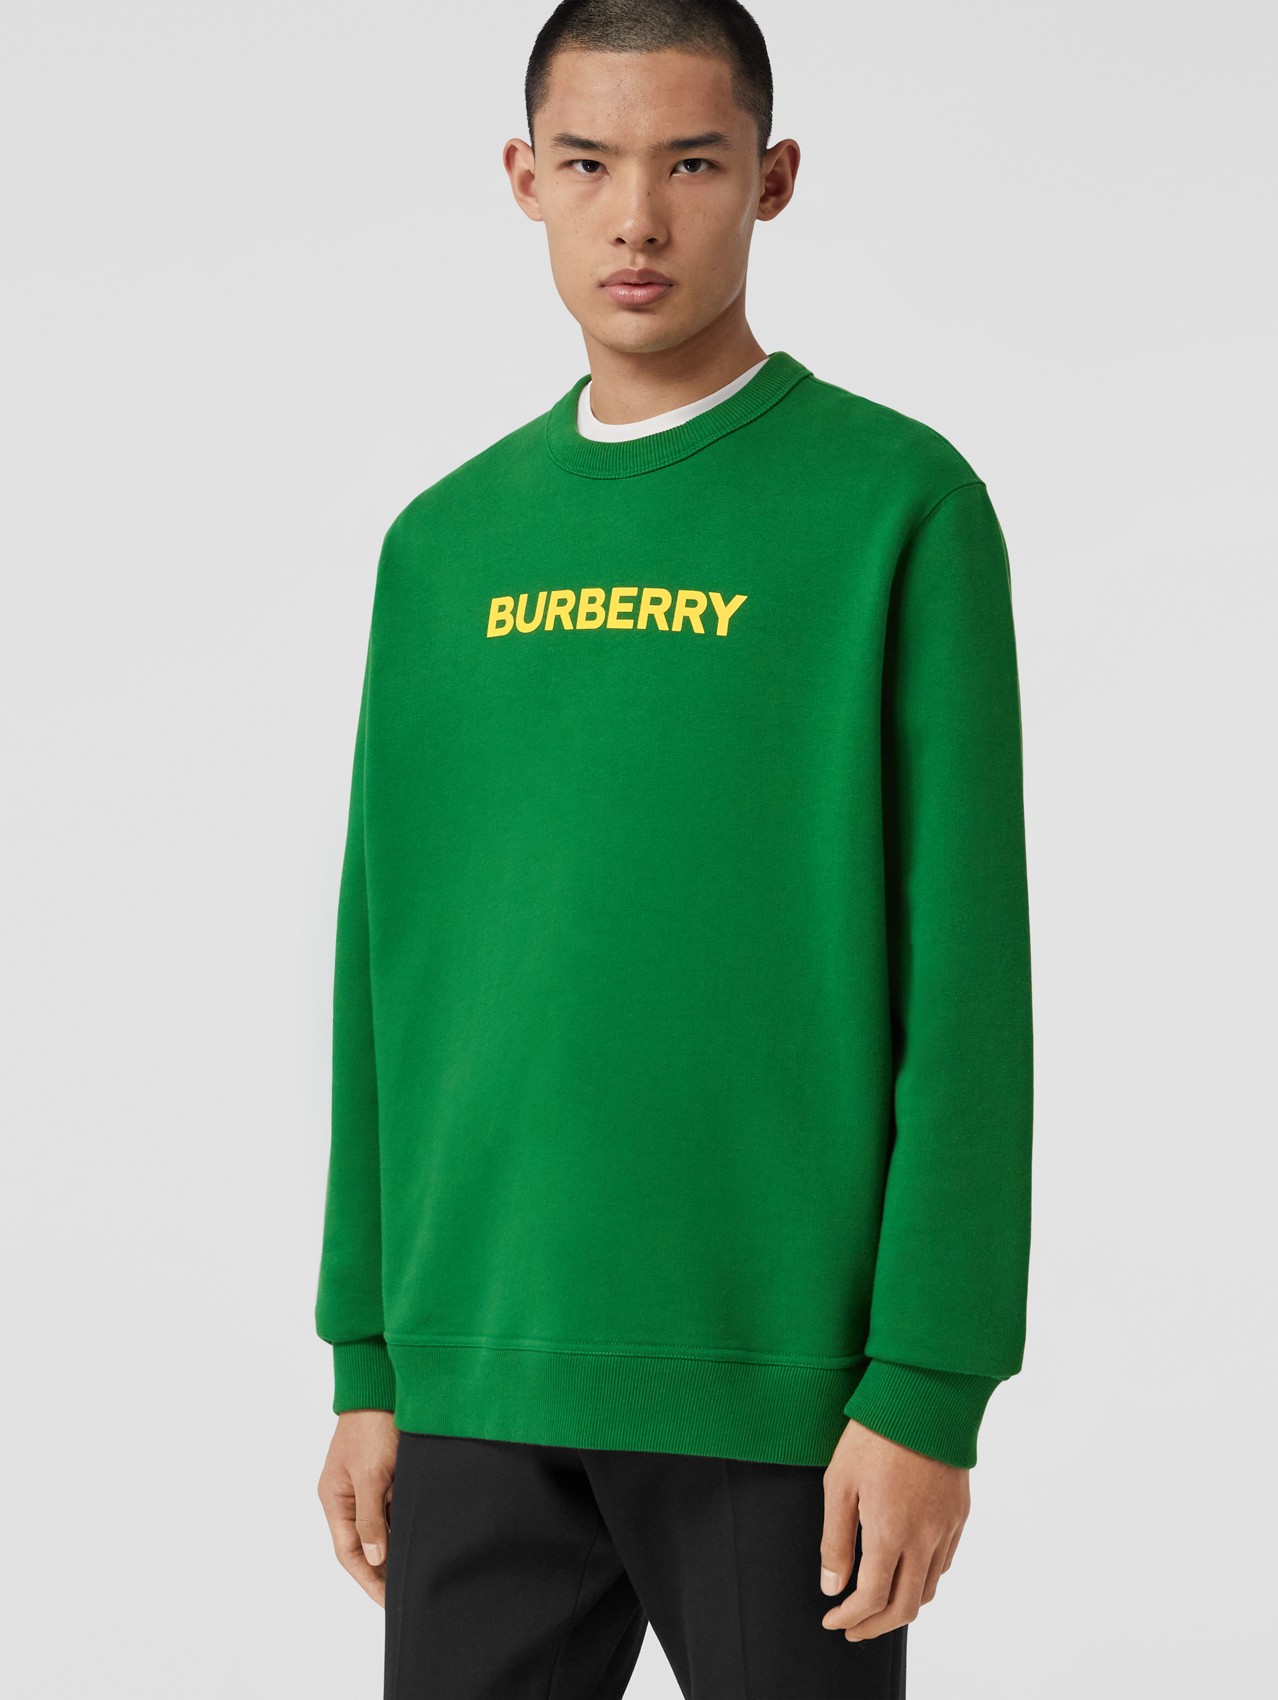 Vintage Burberry Unisex Sweatshirt Kleding Gender-neutrale kleding volwassenen Hoodies & Sweatshirts Sweatshirts XL 